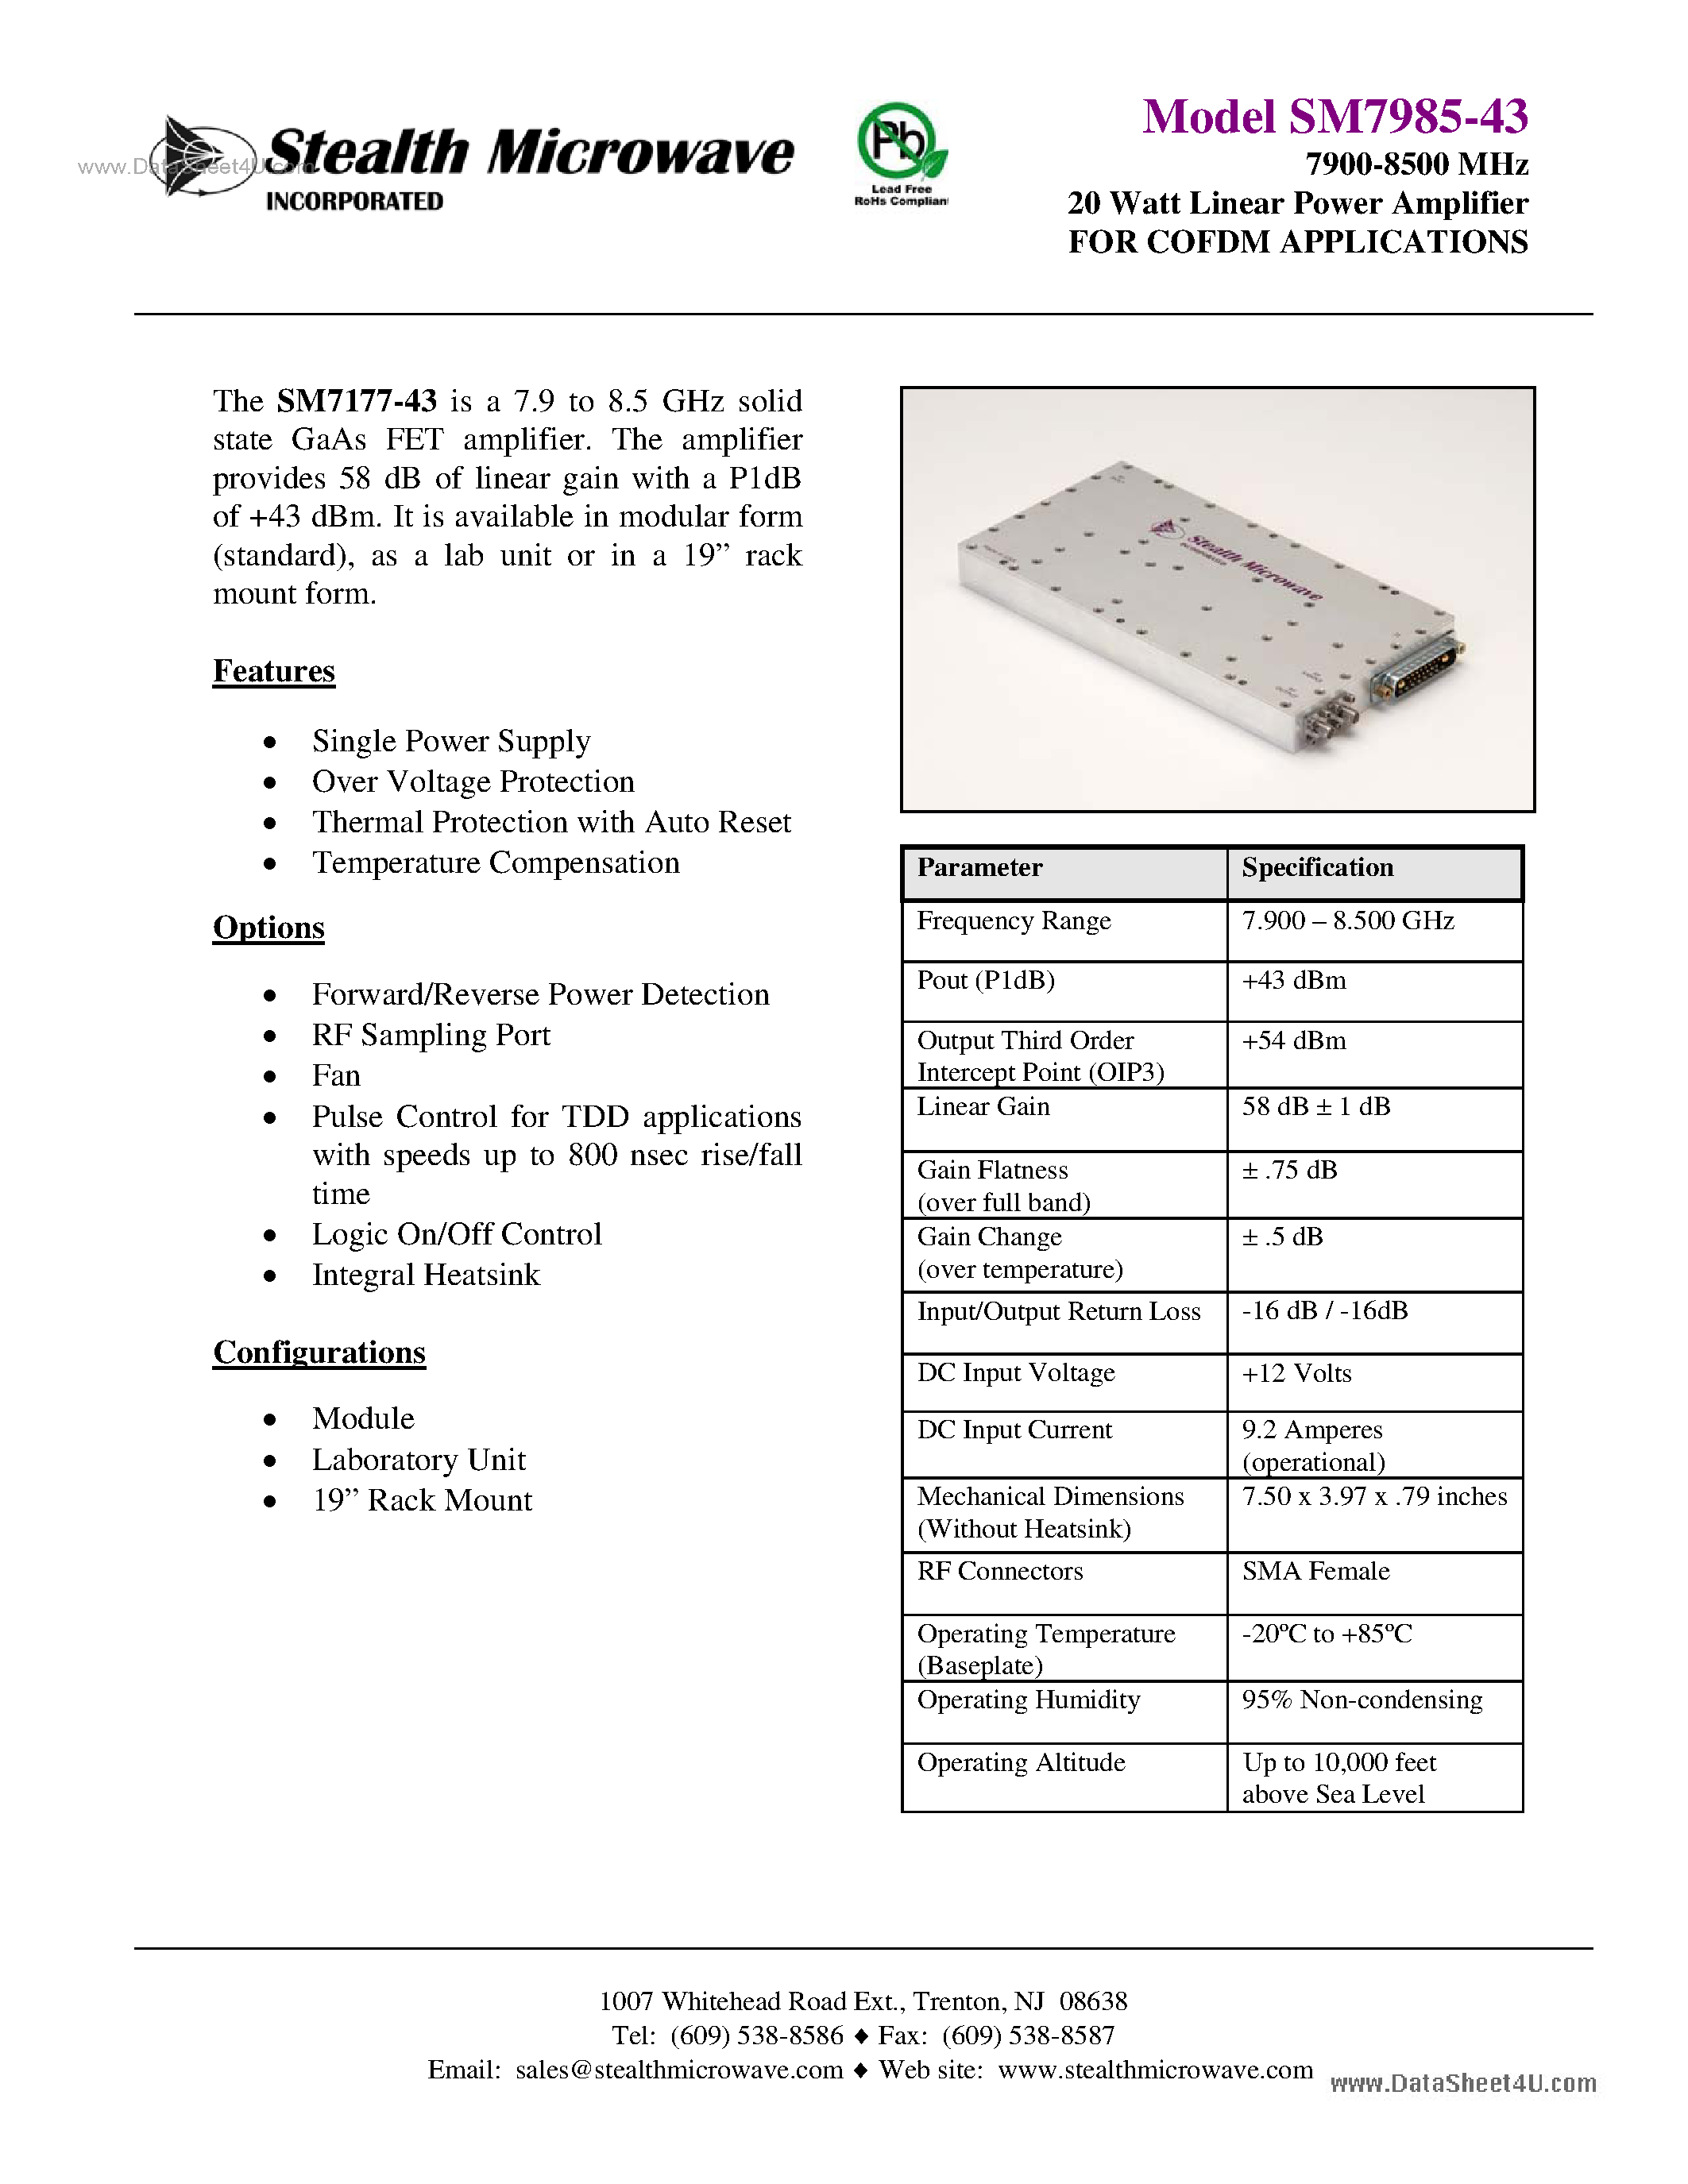 Даташит SM7985-43 - 7900-8500 MHz 20 Watt Linear Power Amplifier страница 1